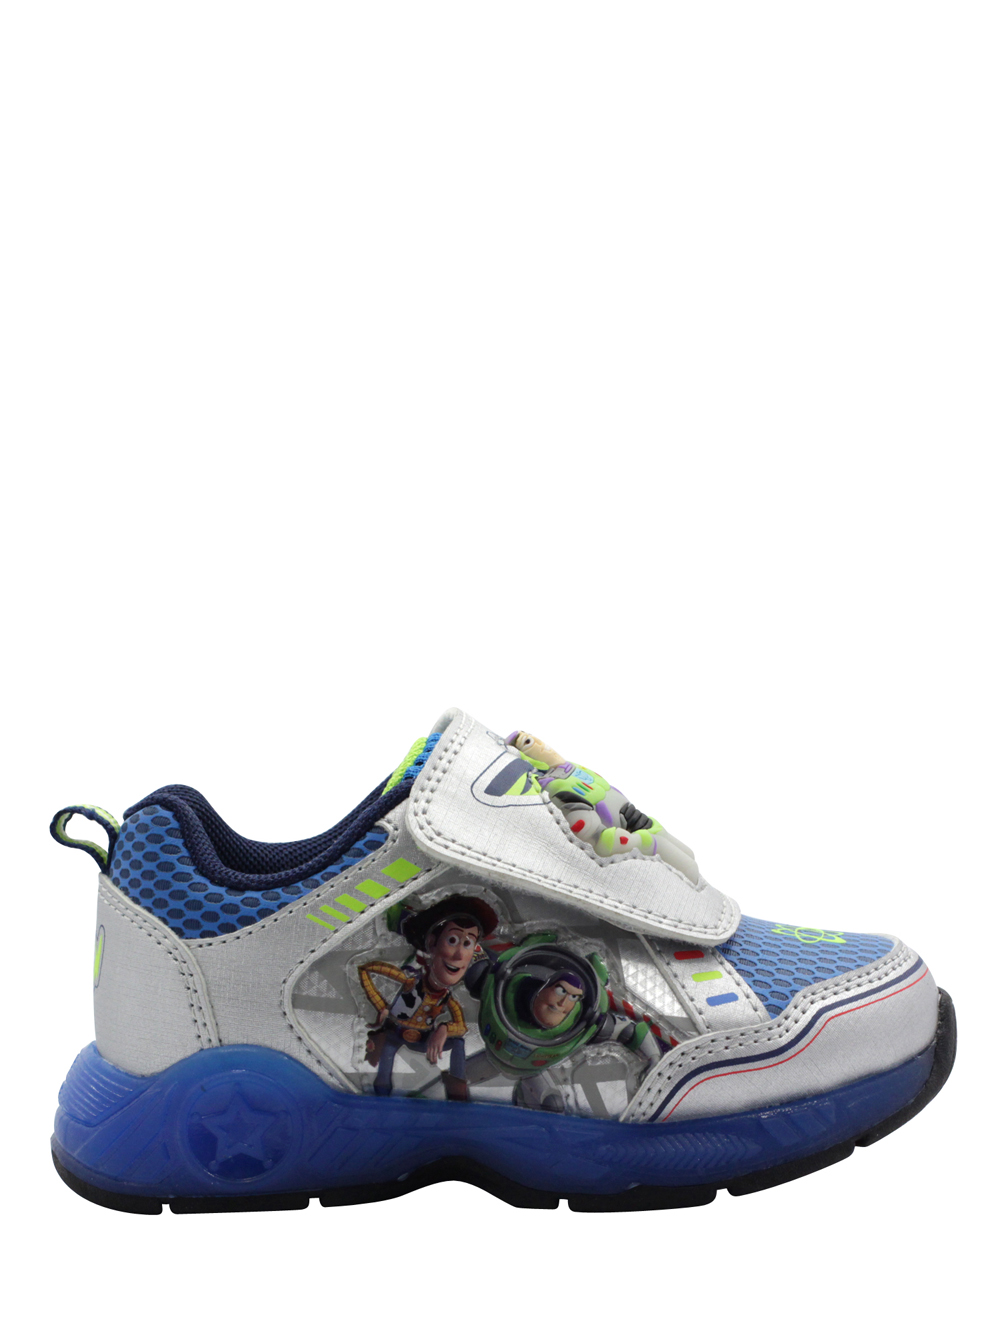 Toddler Boys' Toy Story-Disney Athletic Shoes - image 5 of 5